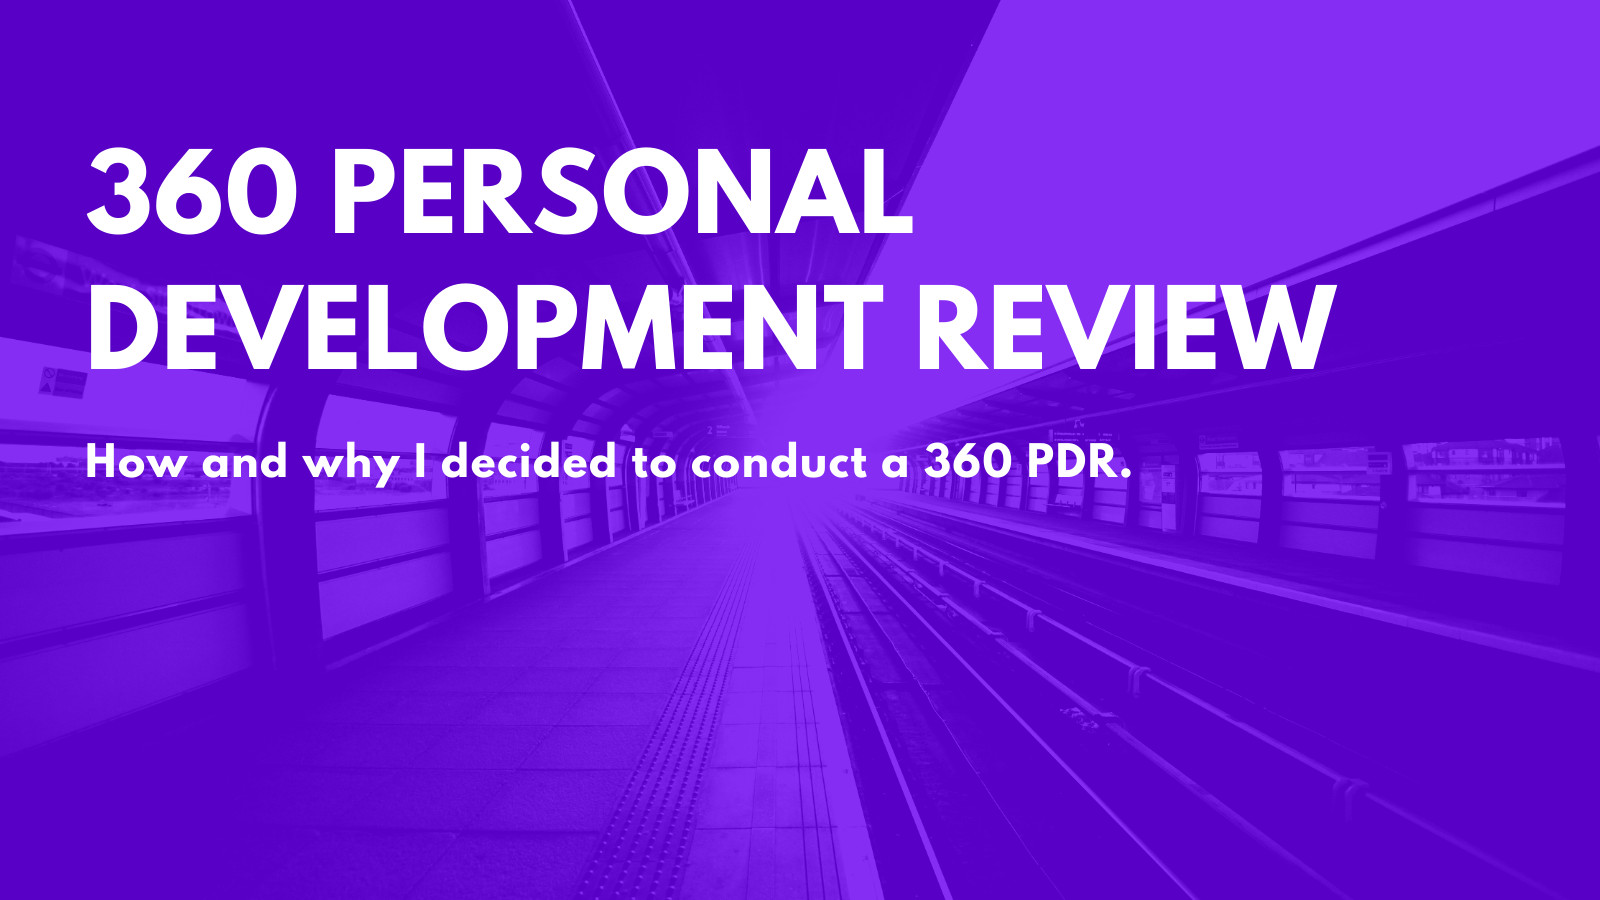 360 personal development review